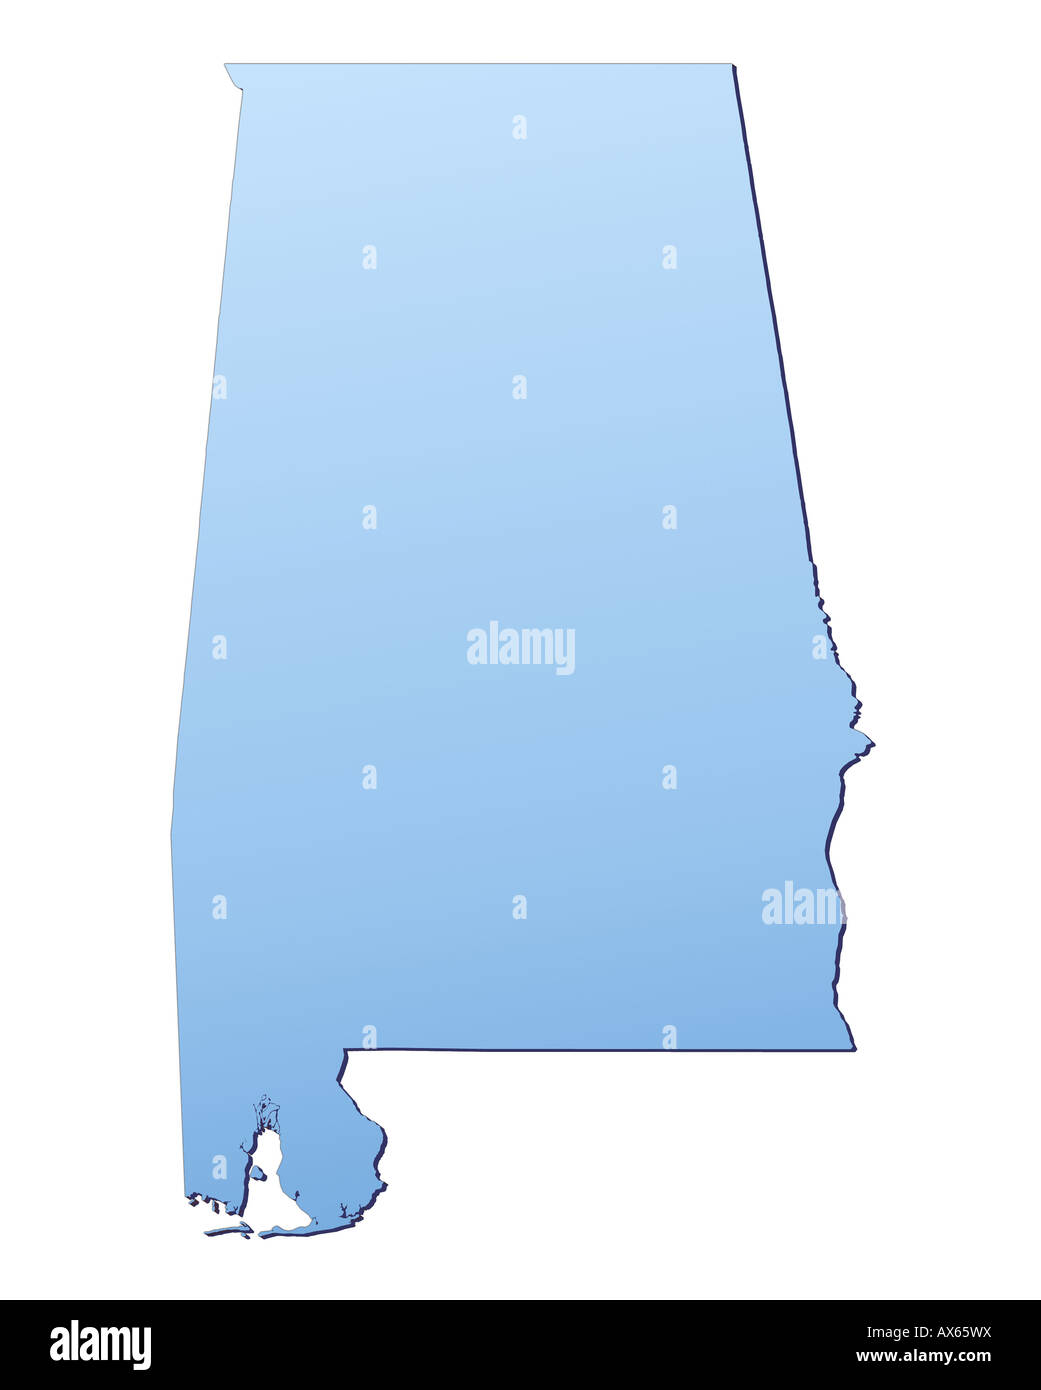 Karte von Alabama Stockfoto